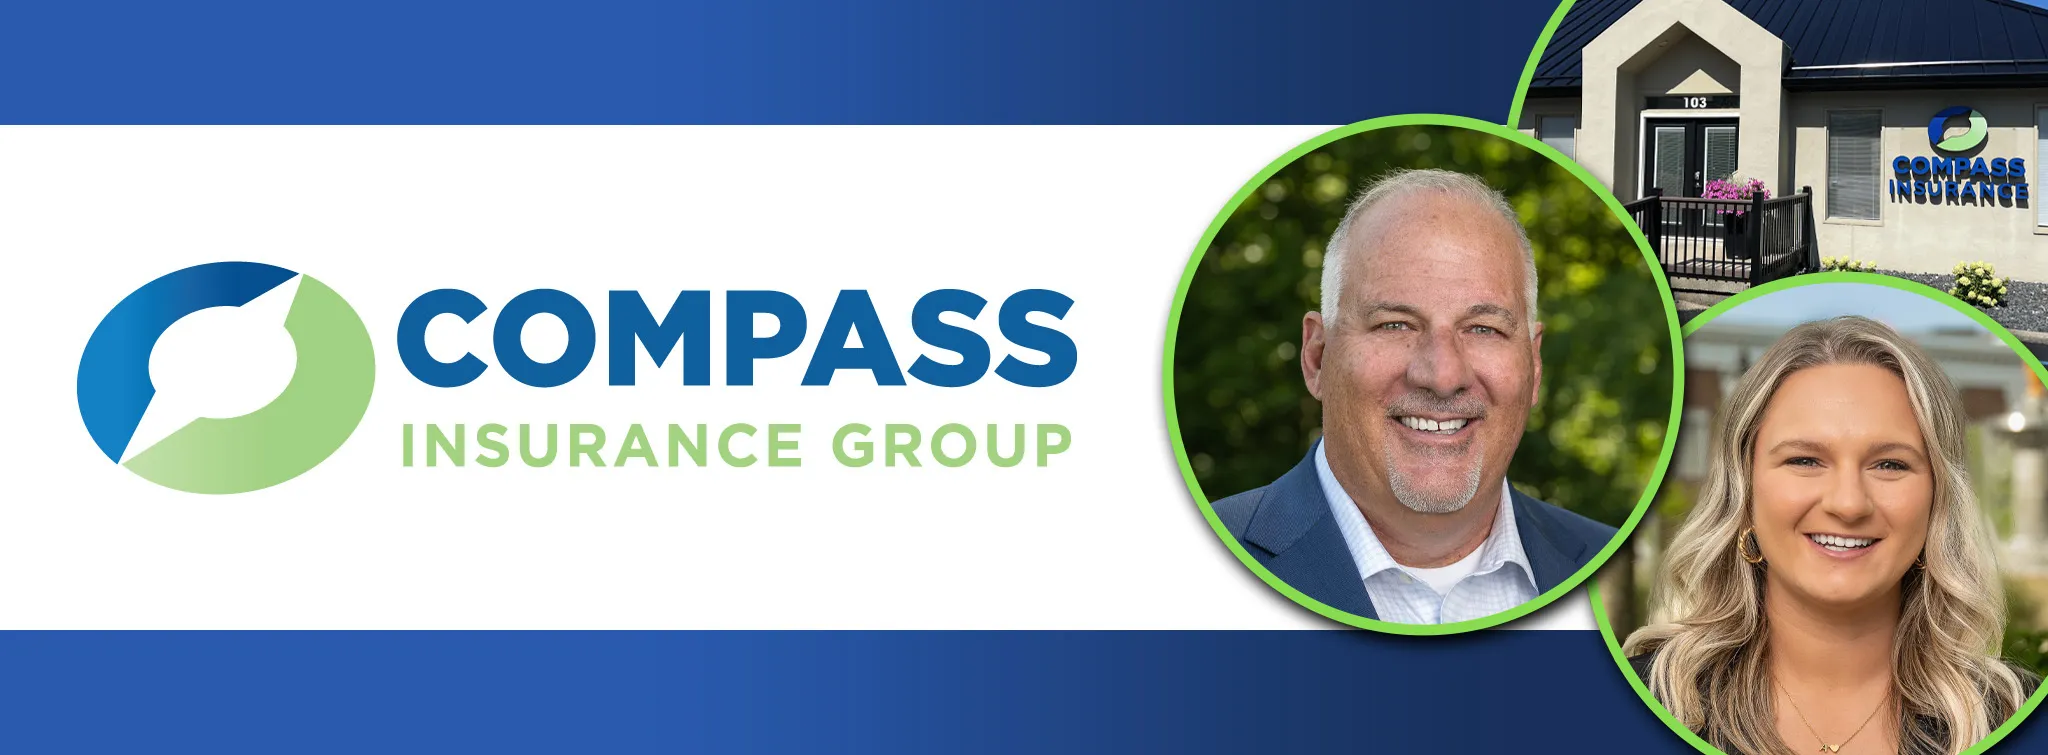 Compass Insurance Group splash logo